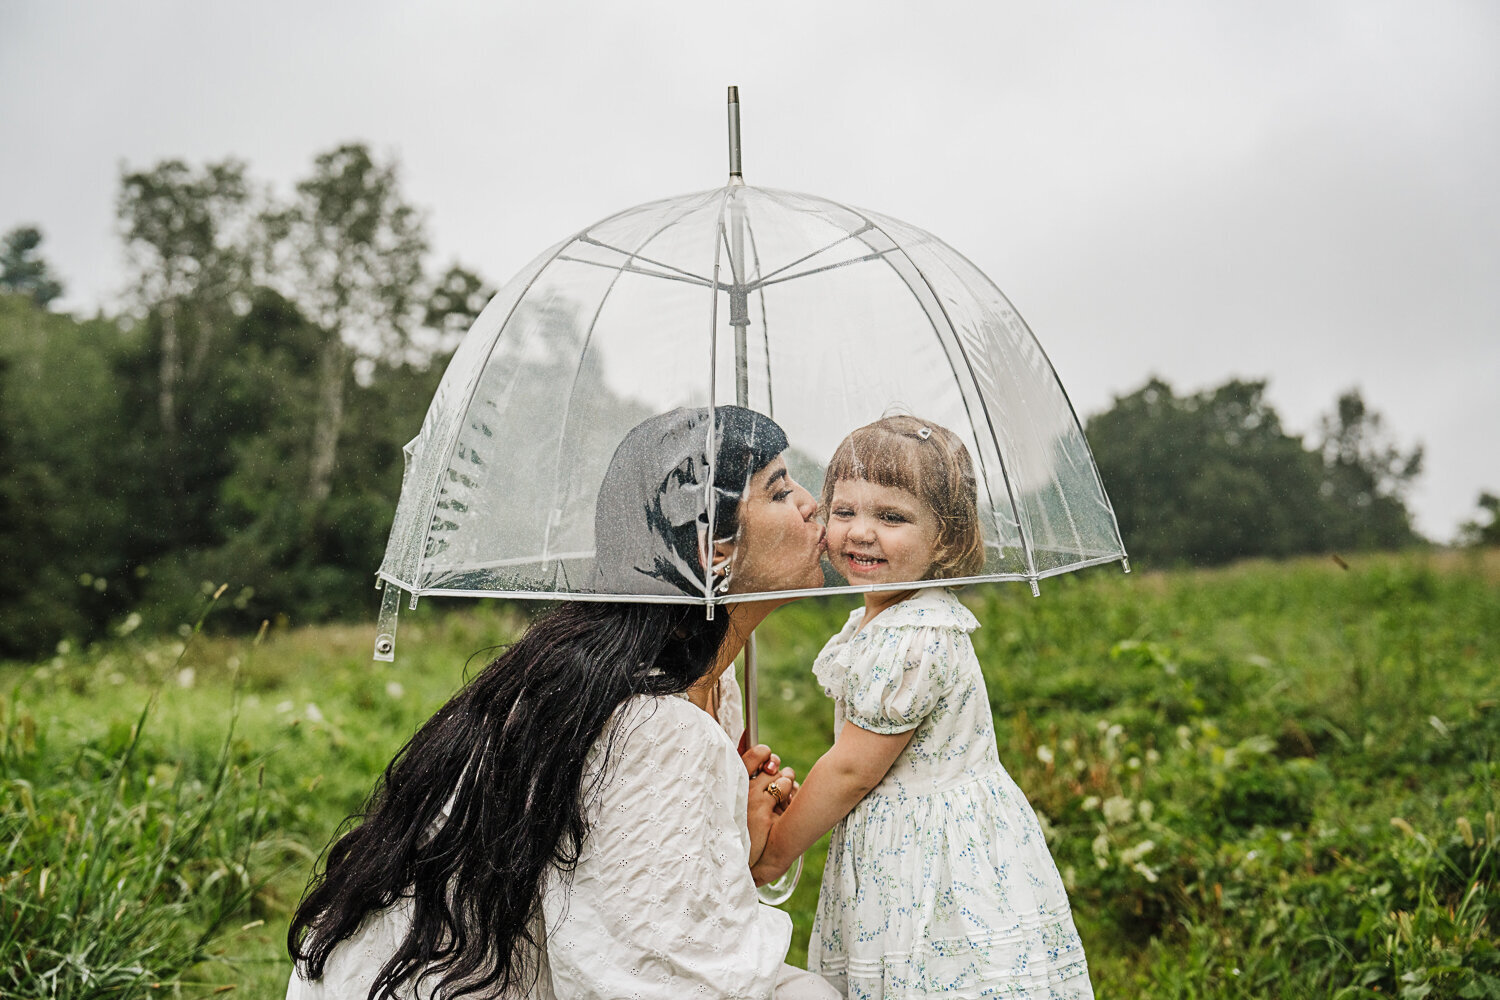 mom kisses little girl under umbrella in a rainy field